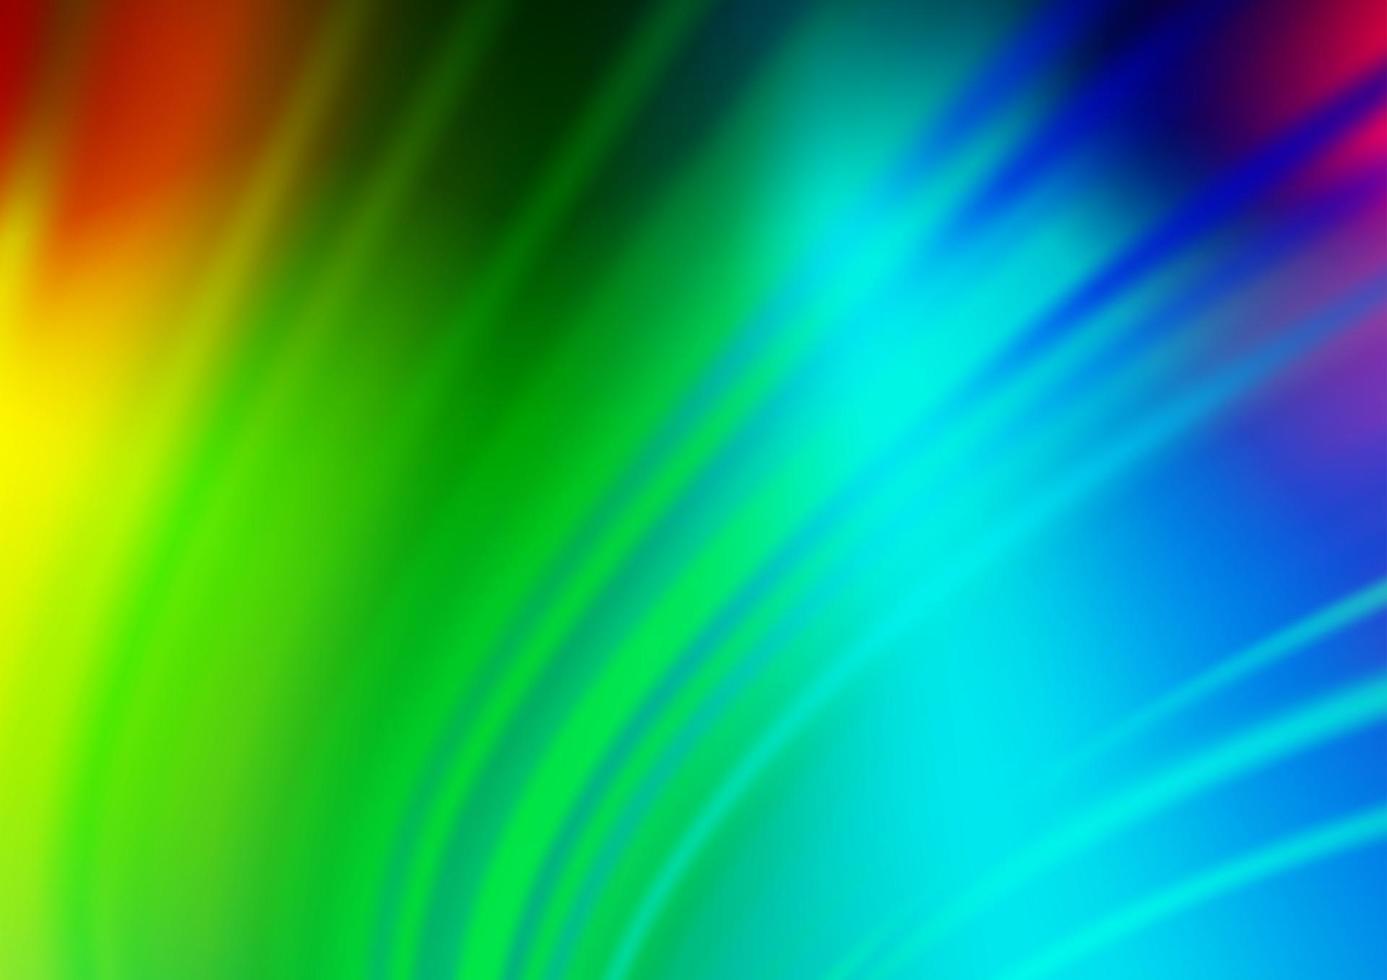 luz multicolor, arco-íris vetor abstrato turva padrão.